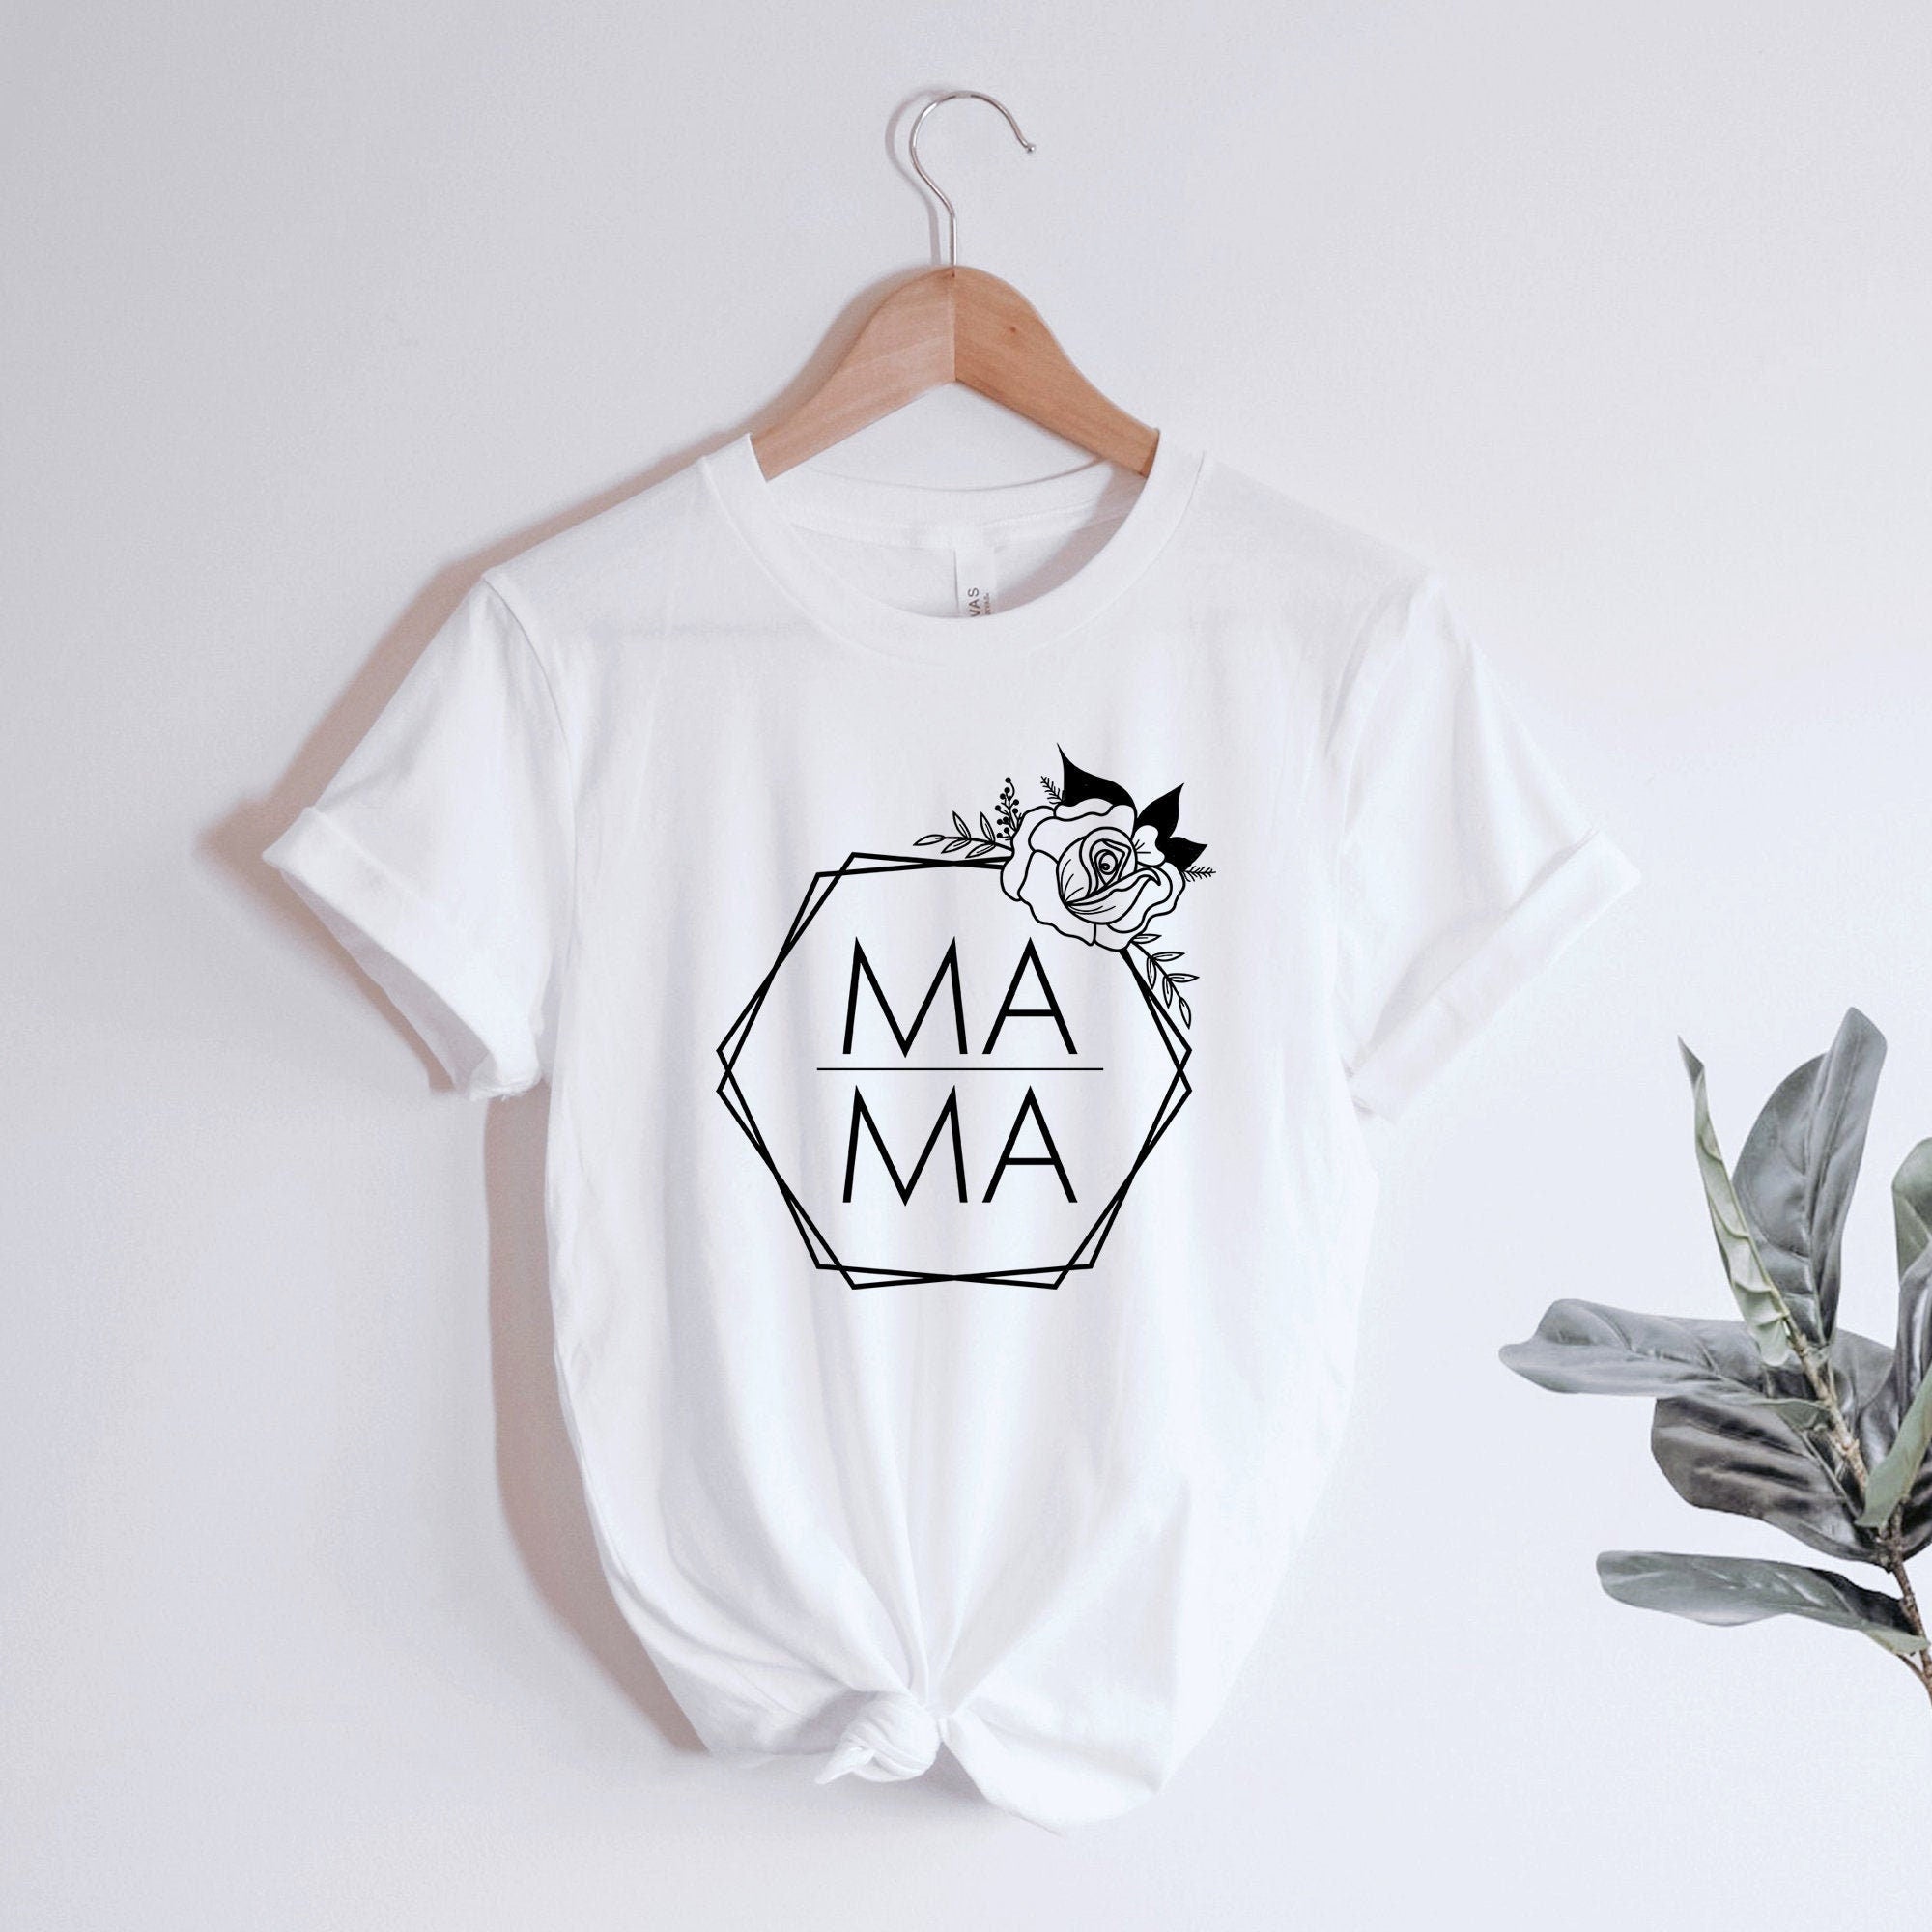 Mama Shirt, Shirts for Moms, Trendy Mom T-Shirts, Cool Mom Shirts, Shirts for Moms, Gift for Her